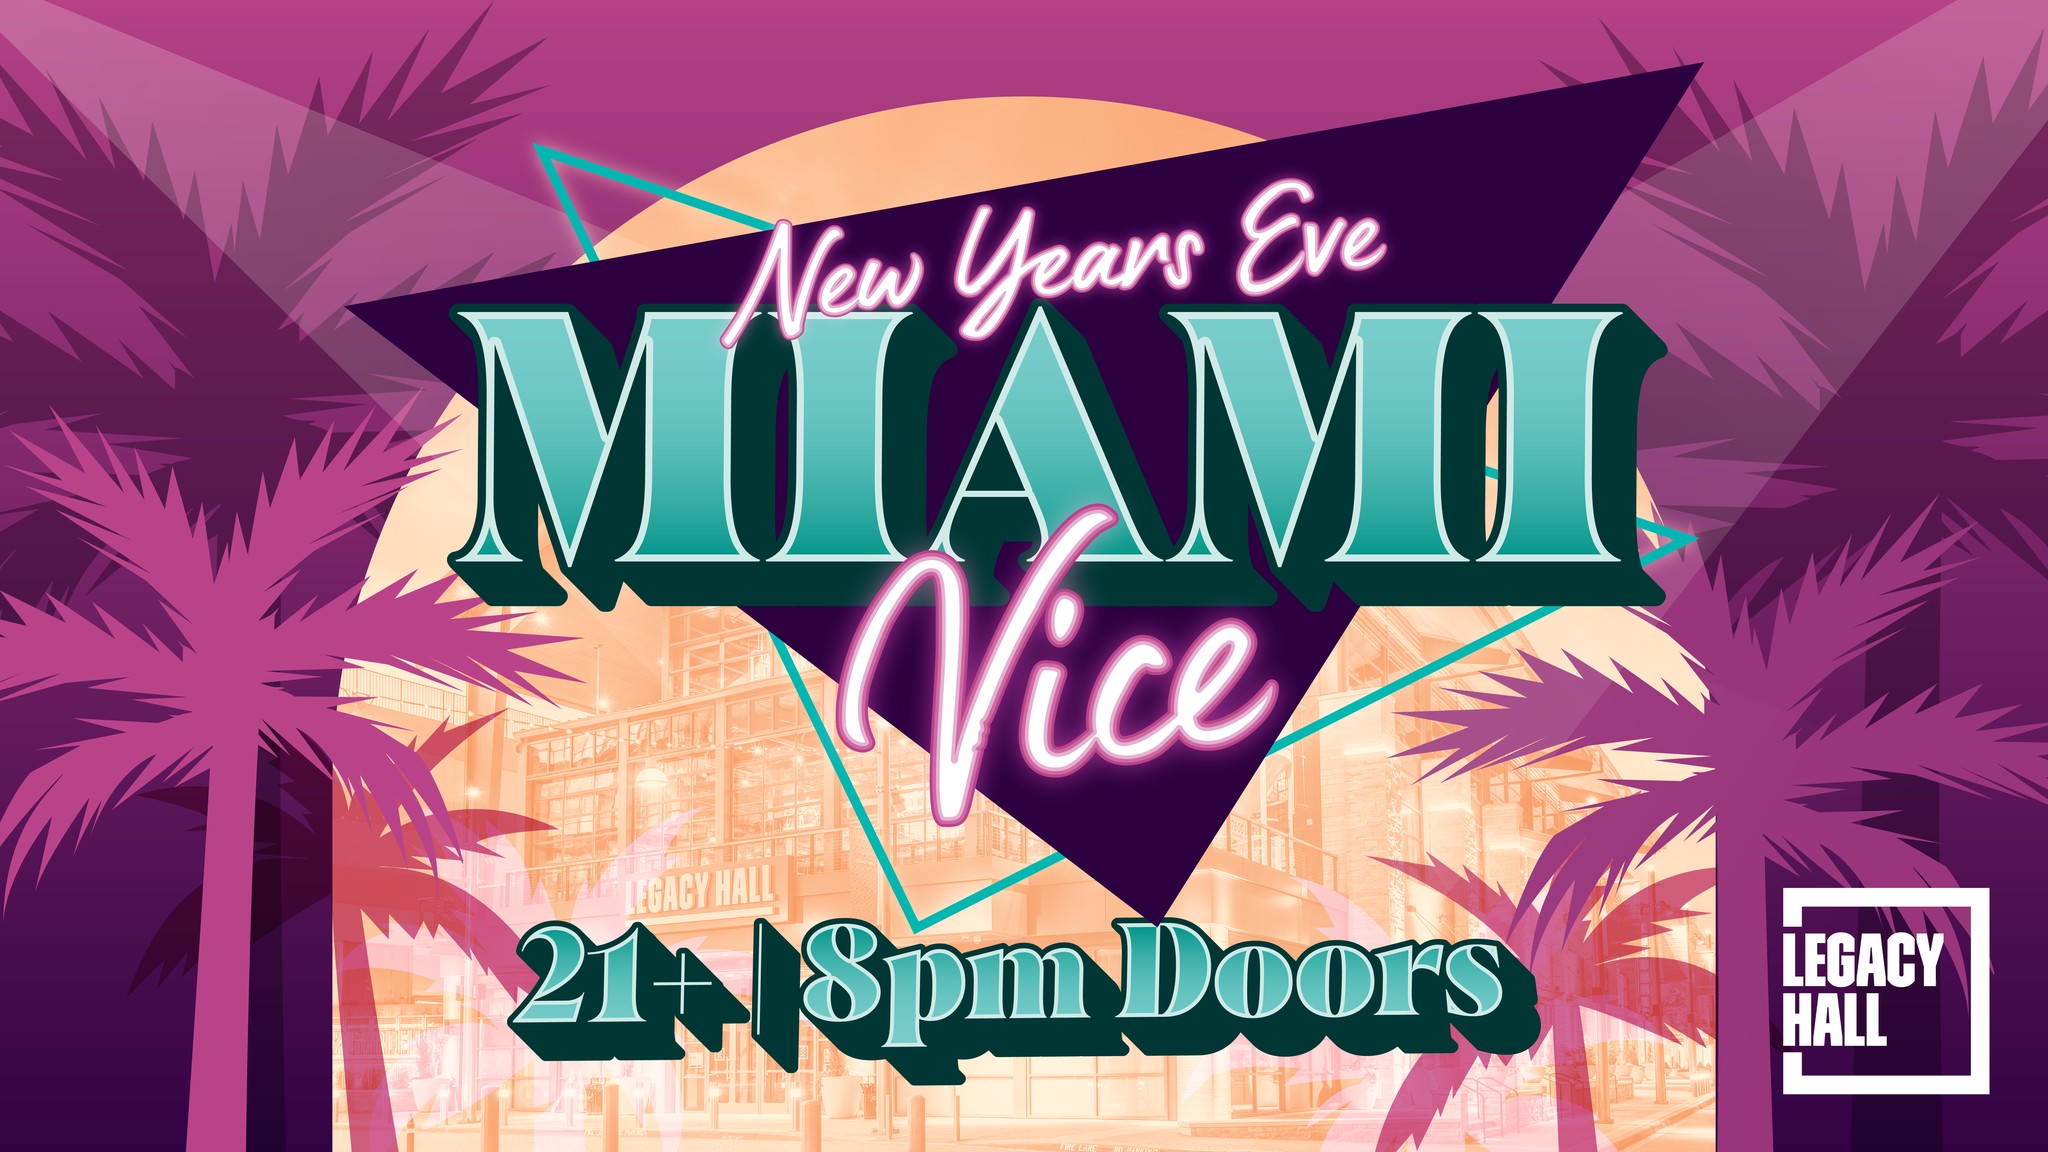 NYE Miami Vice LH Facebook